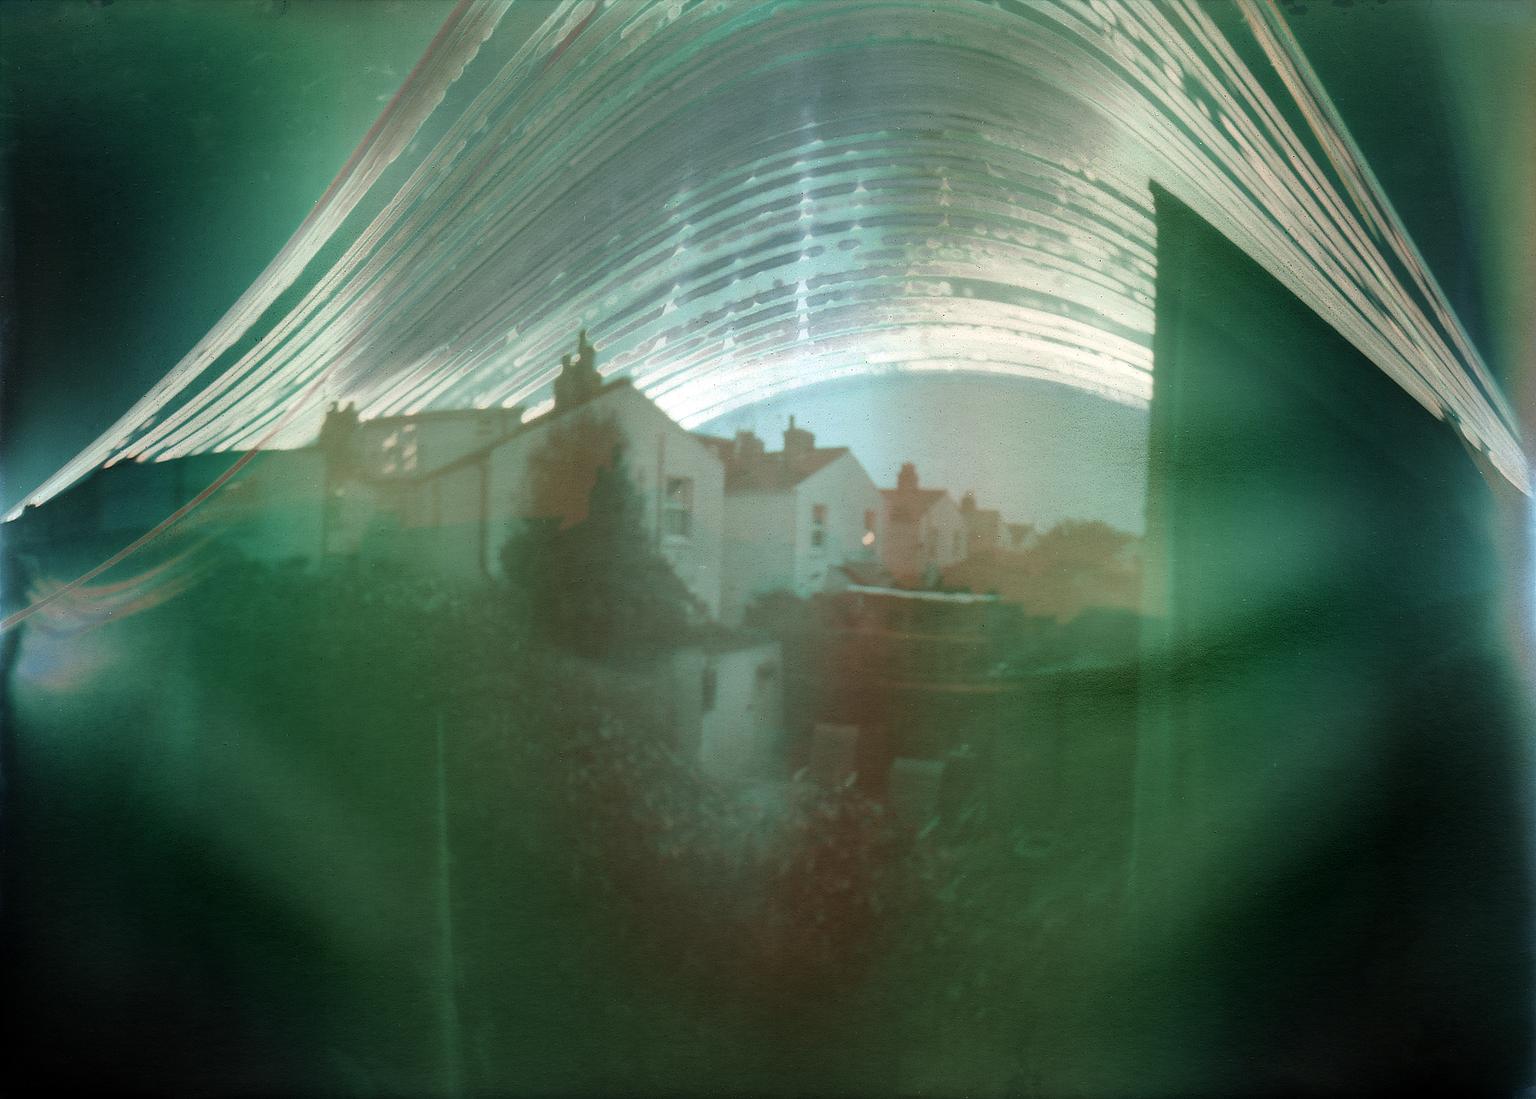 Image for entry 'Pinhole solargraph: Poet's Corner, Hove, UK'